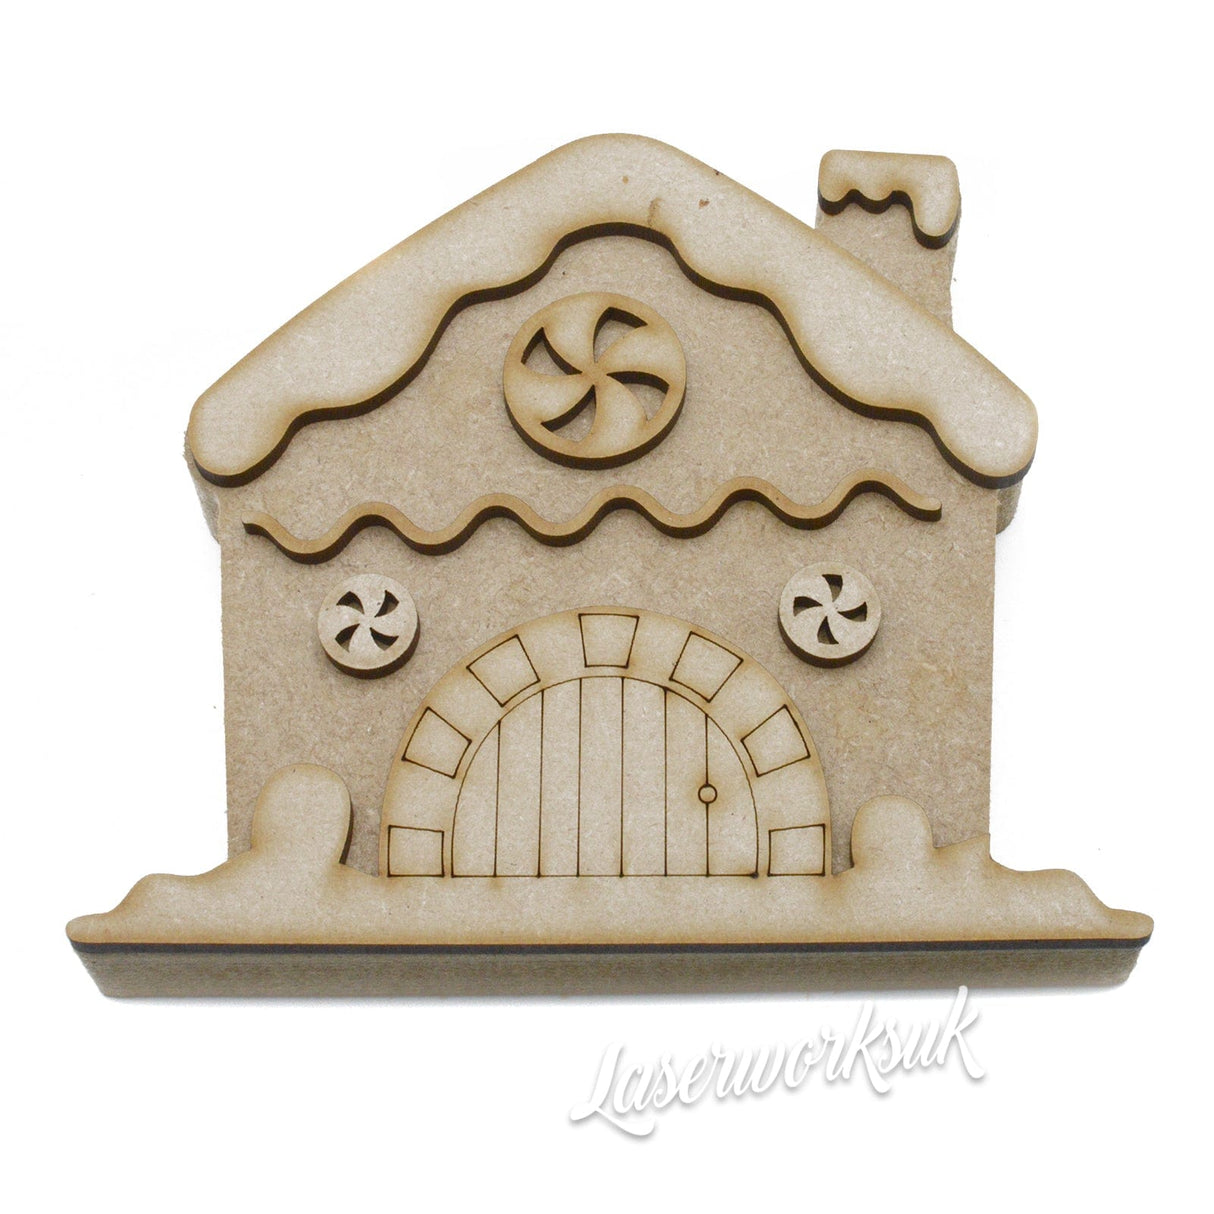 Freestanding Layered Christmas Gingerbread House - Laserworksuk